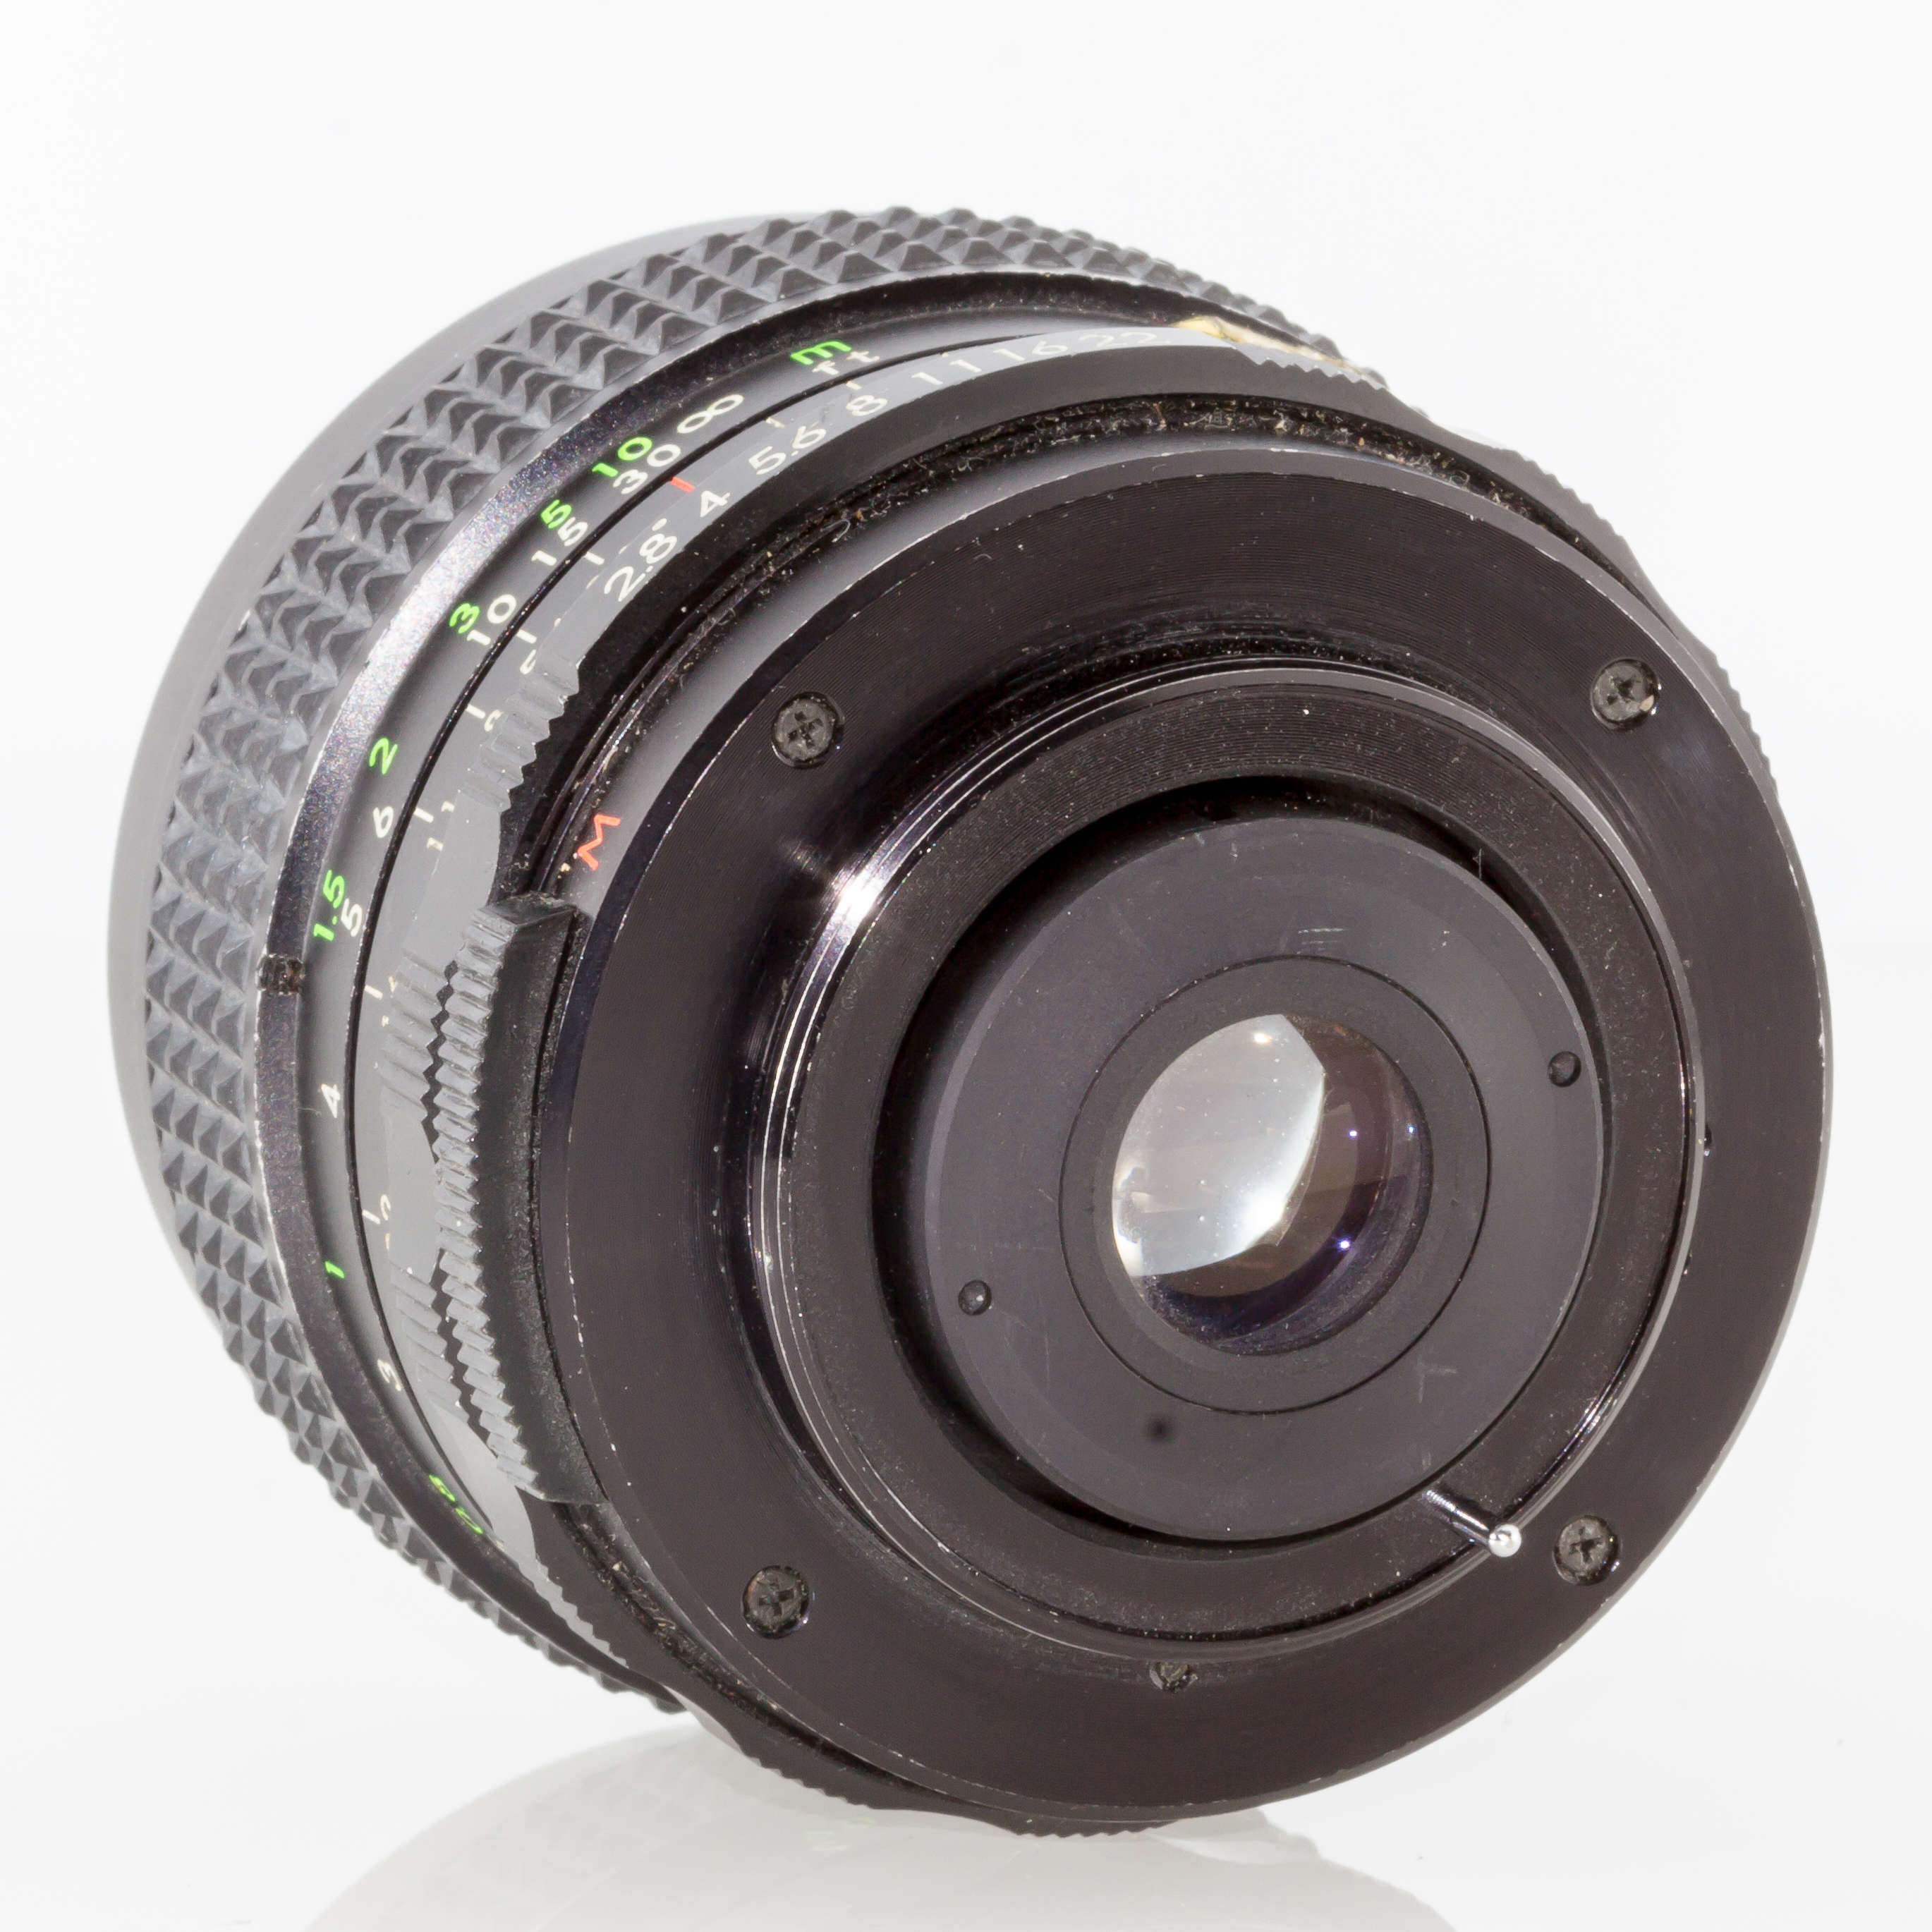 File:Soligor lens Wide-Auto 28mm, f 2.8-4635.jpg - Wikimedia Commons